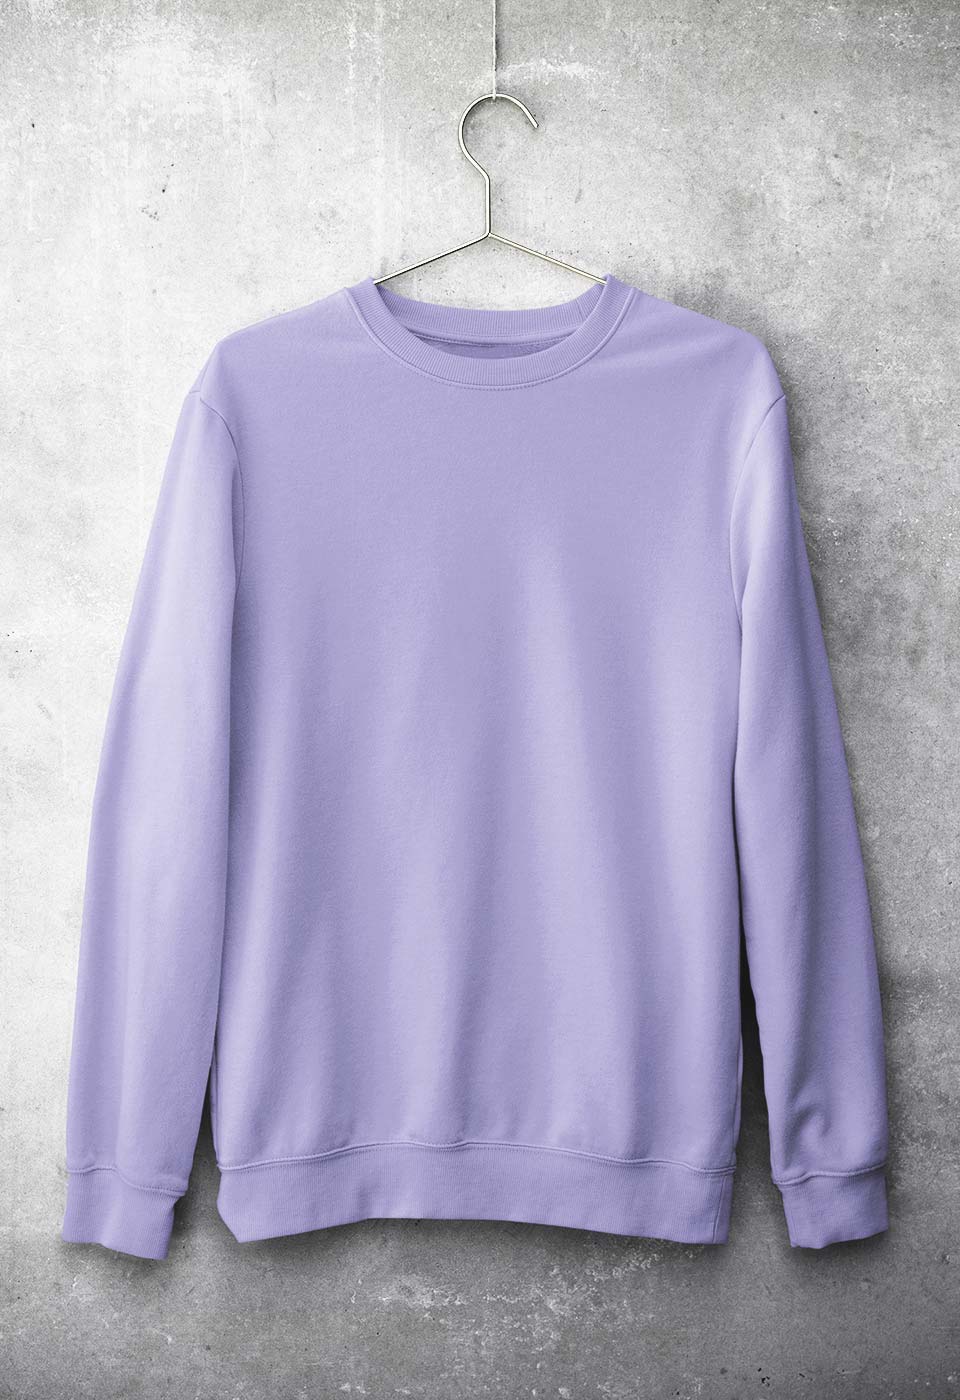 Plain Lavender Unisex Sweatshirt for Men/Women